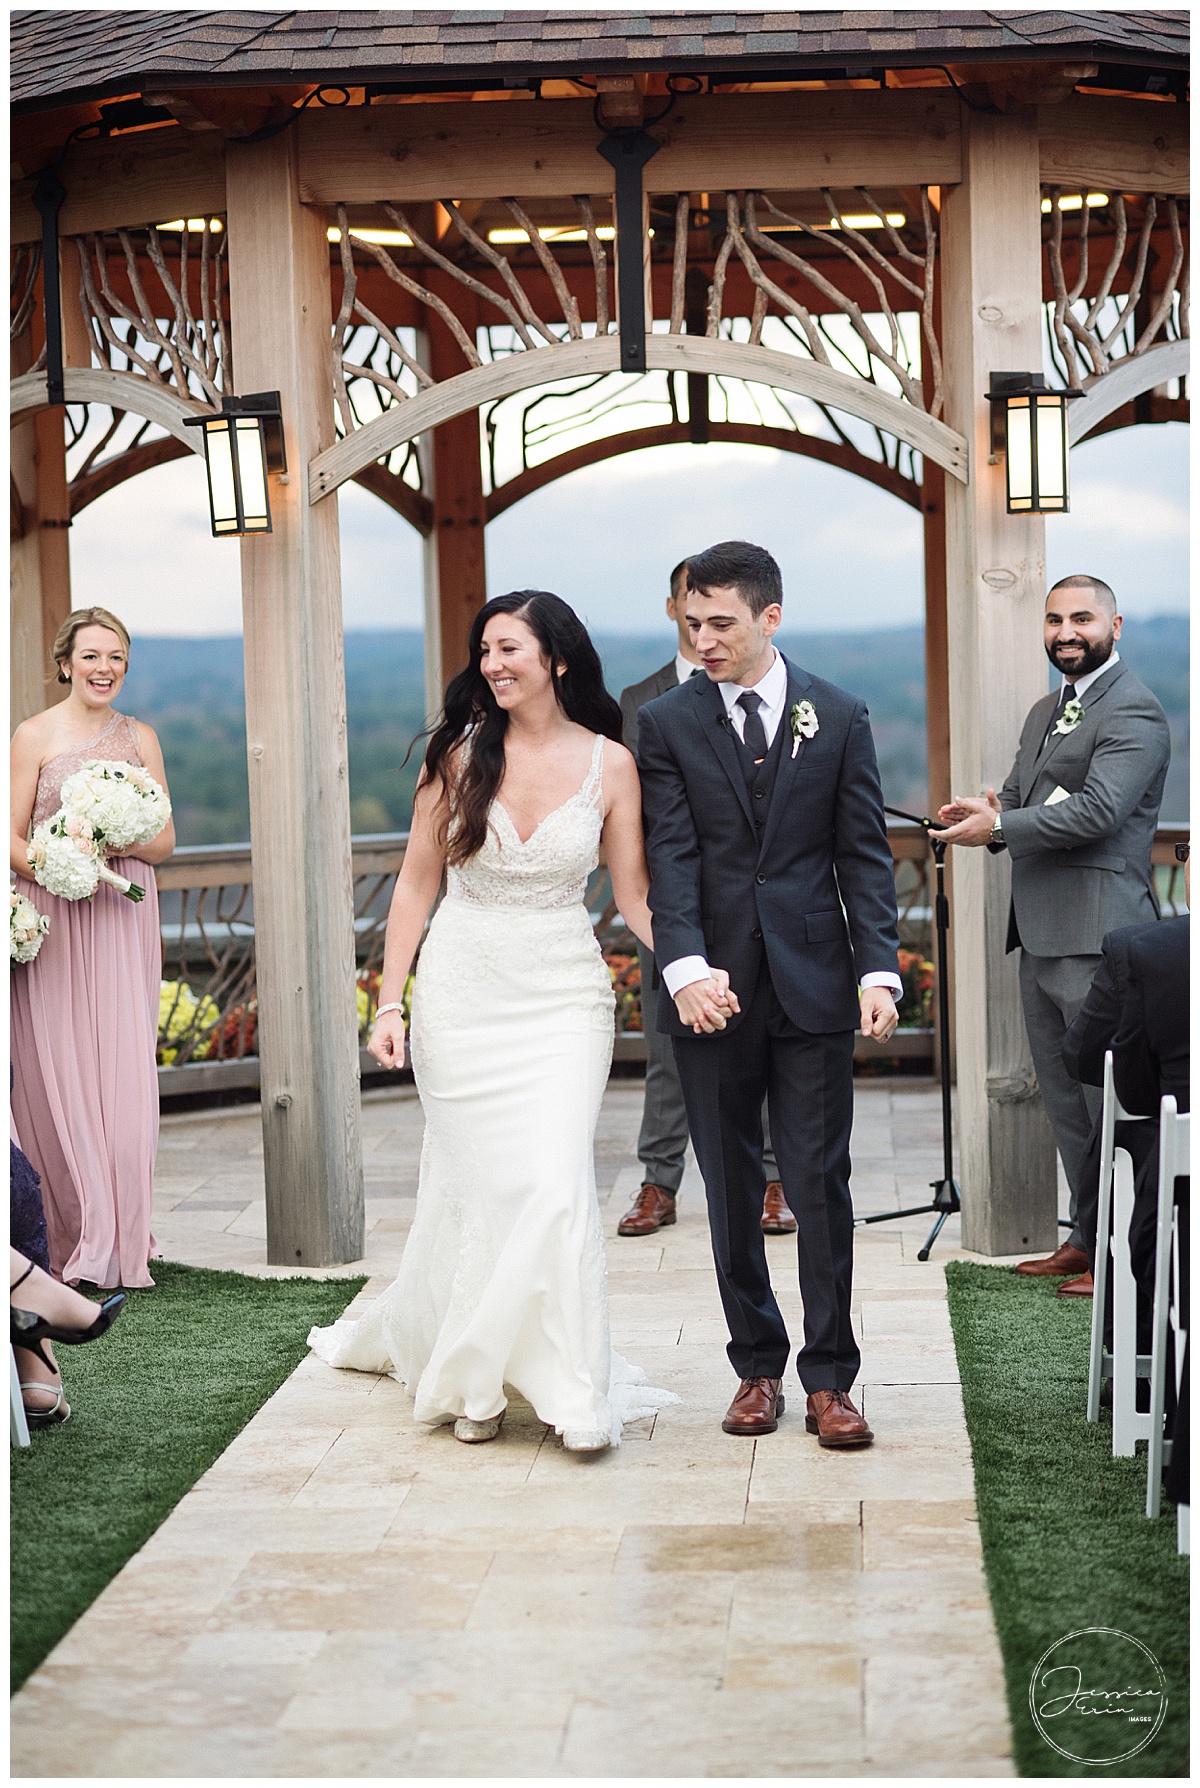 Aubrey,Aubrey Greene Photography,Aubrey Wedding,Jonathan and Cameron Nogueira,The Starting Gate at GreatHorse,Wedding,Weddings,